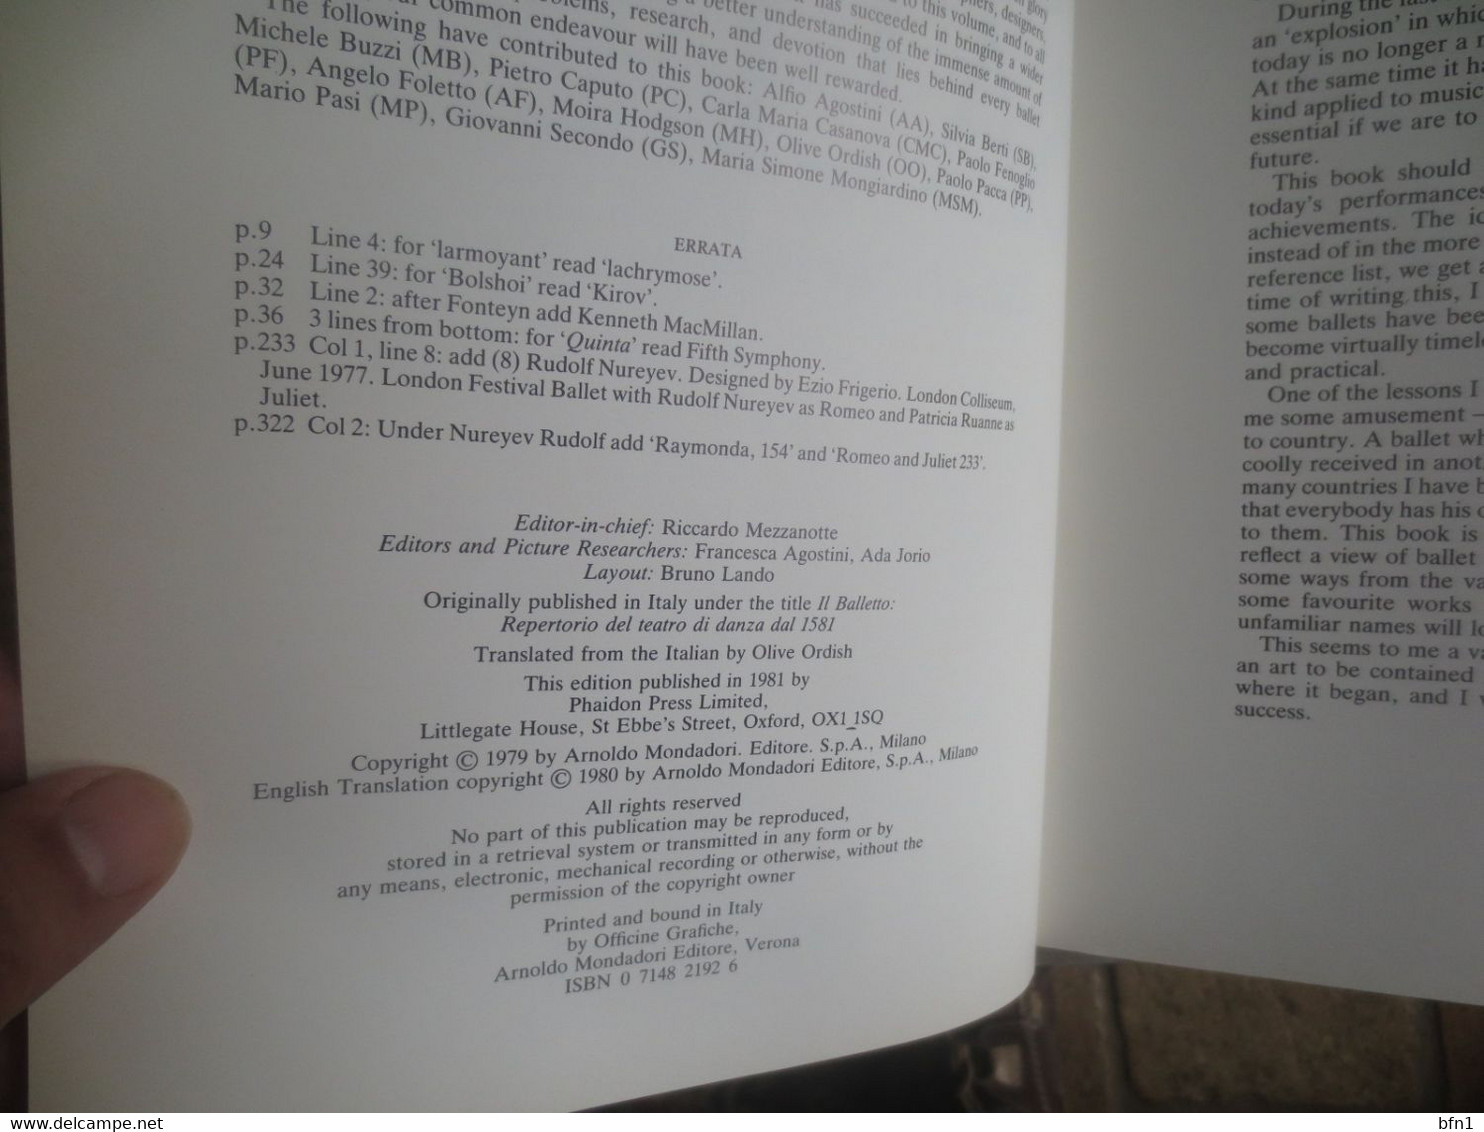 Phaidon Book Of The Ballet Hardcover – January 1, 1981 By RICCARDO MEZZANOTTE (Editor), RUDOLF NUREYEV (Preface) - Cultura